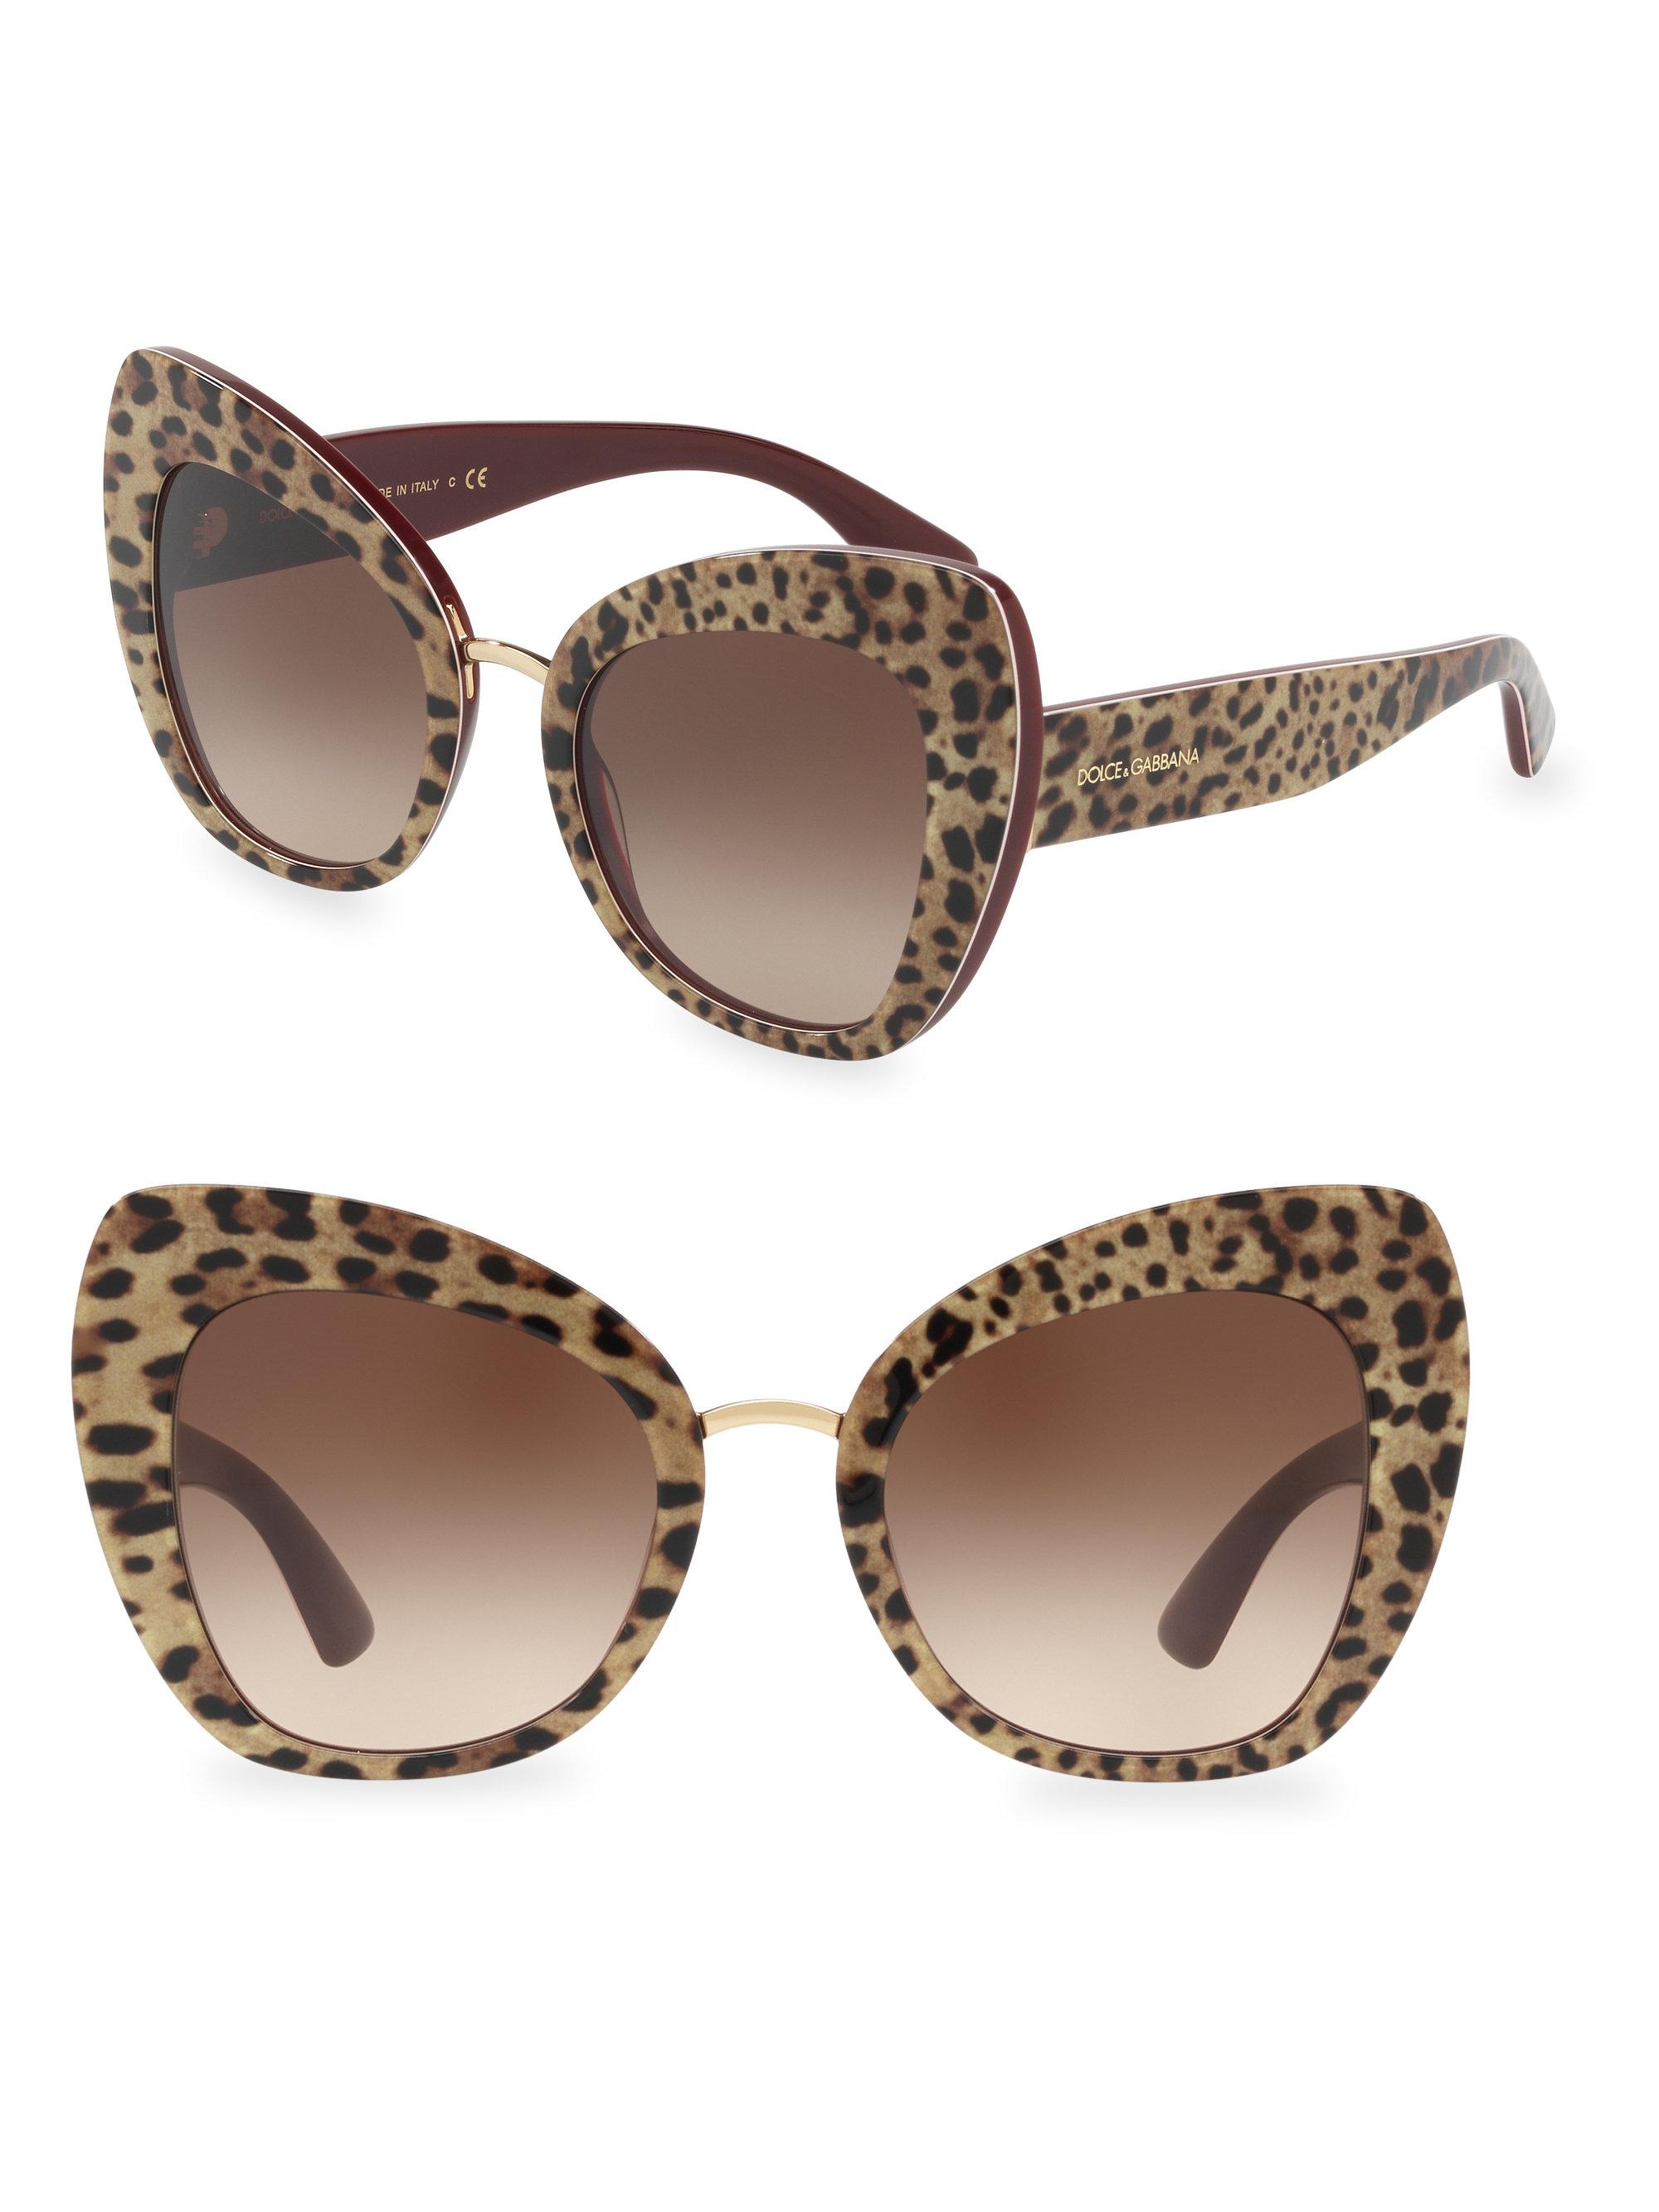 d&g leopard sunglasses